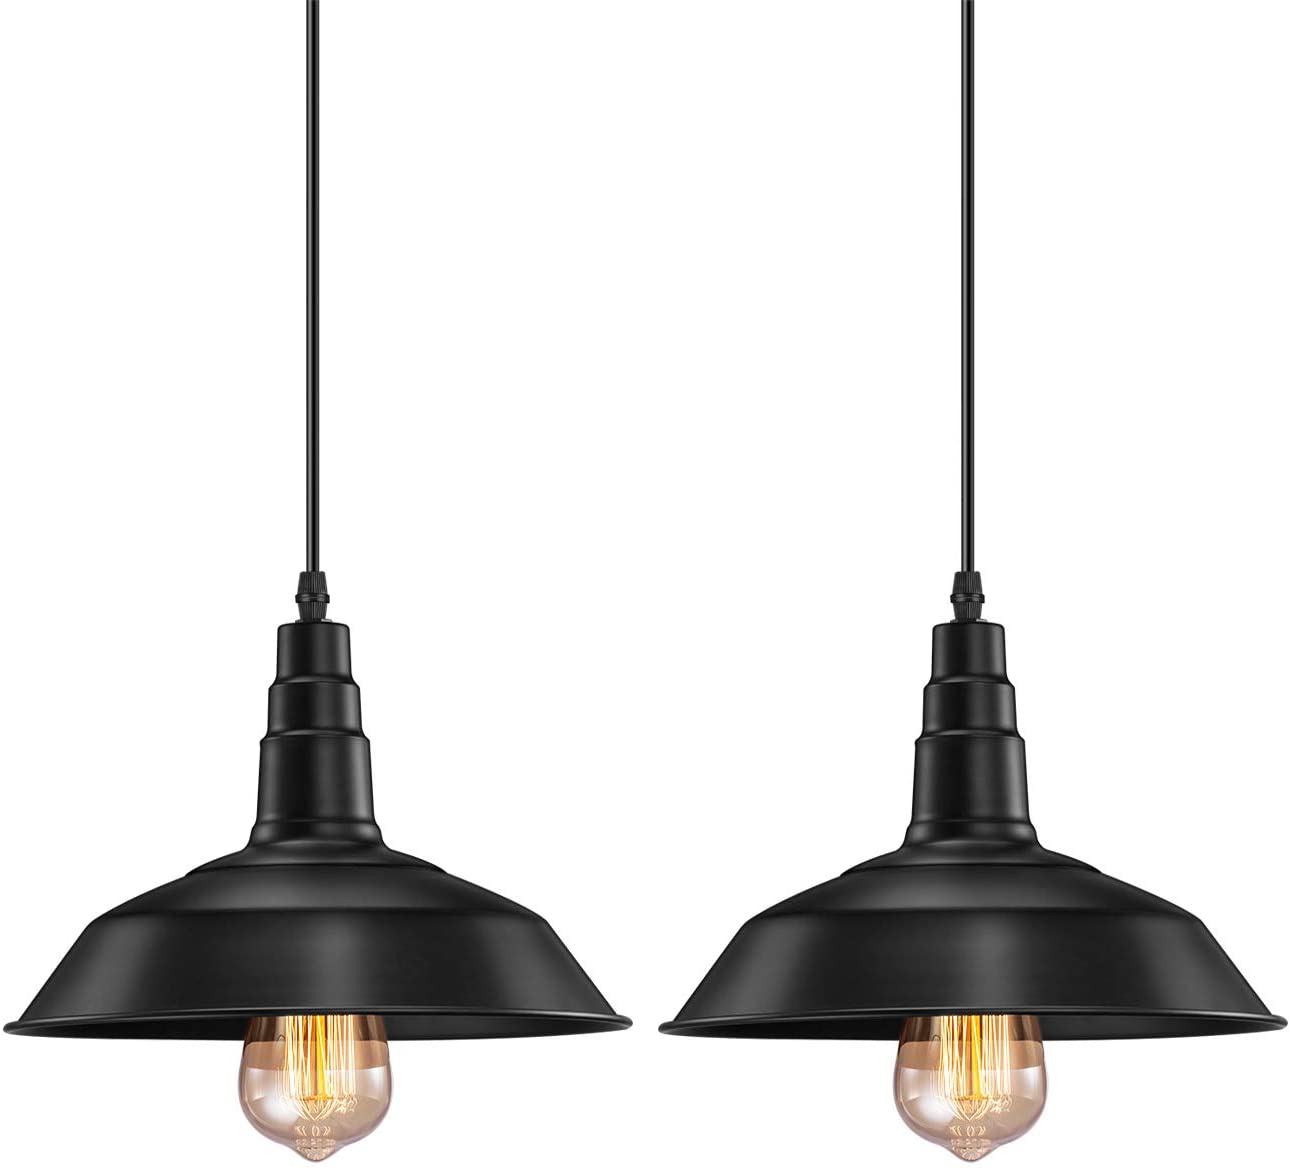 Industrial Pendant Light FadimiKoo E26 E27 Black Vintage Hanging Pendant Lights Retro Lamp Fixtures for Kitchen Home Lighting Decor 2 Pack